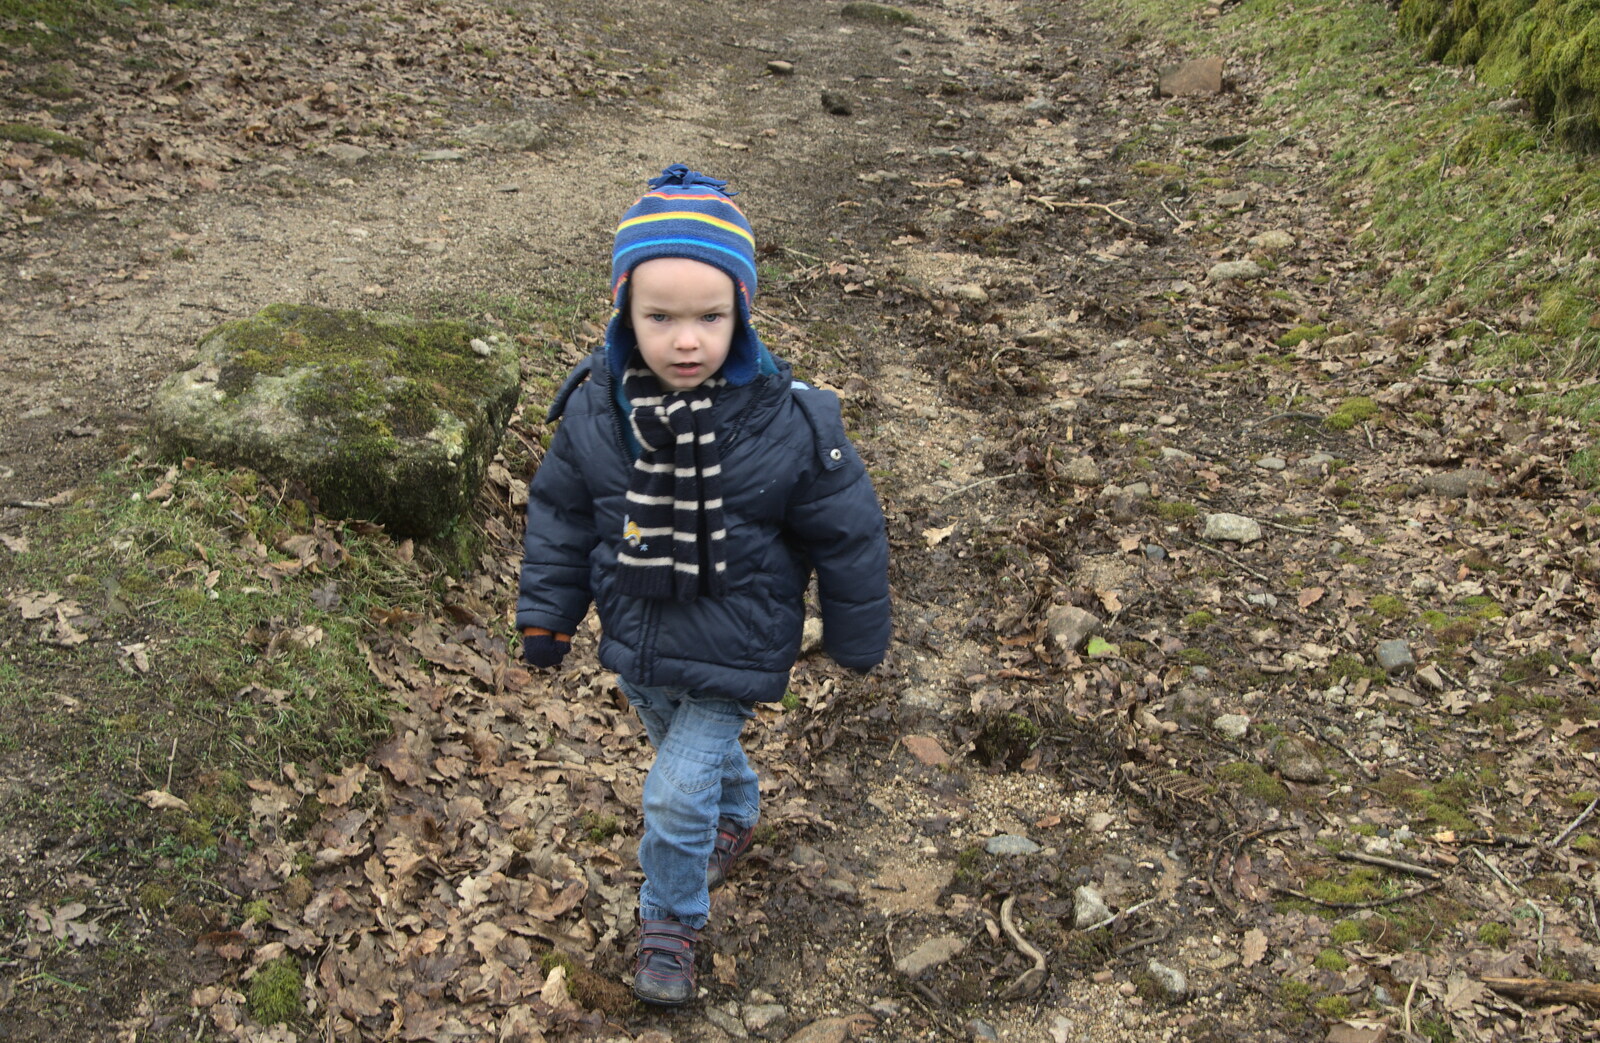 Harry gets his stroll on from A Trip to Grandma J's, Spreyton, Devon - 18th February 2015